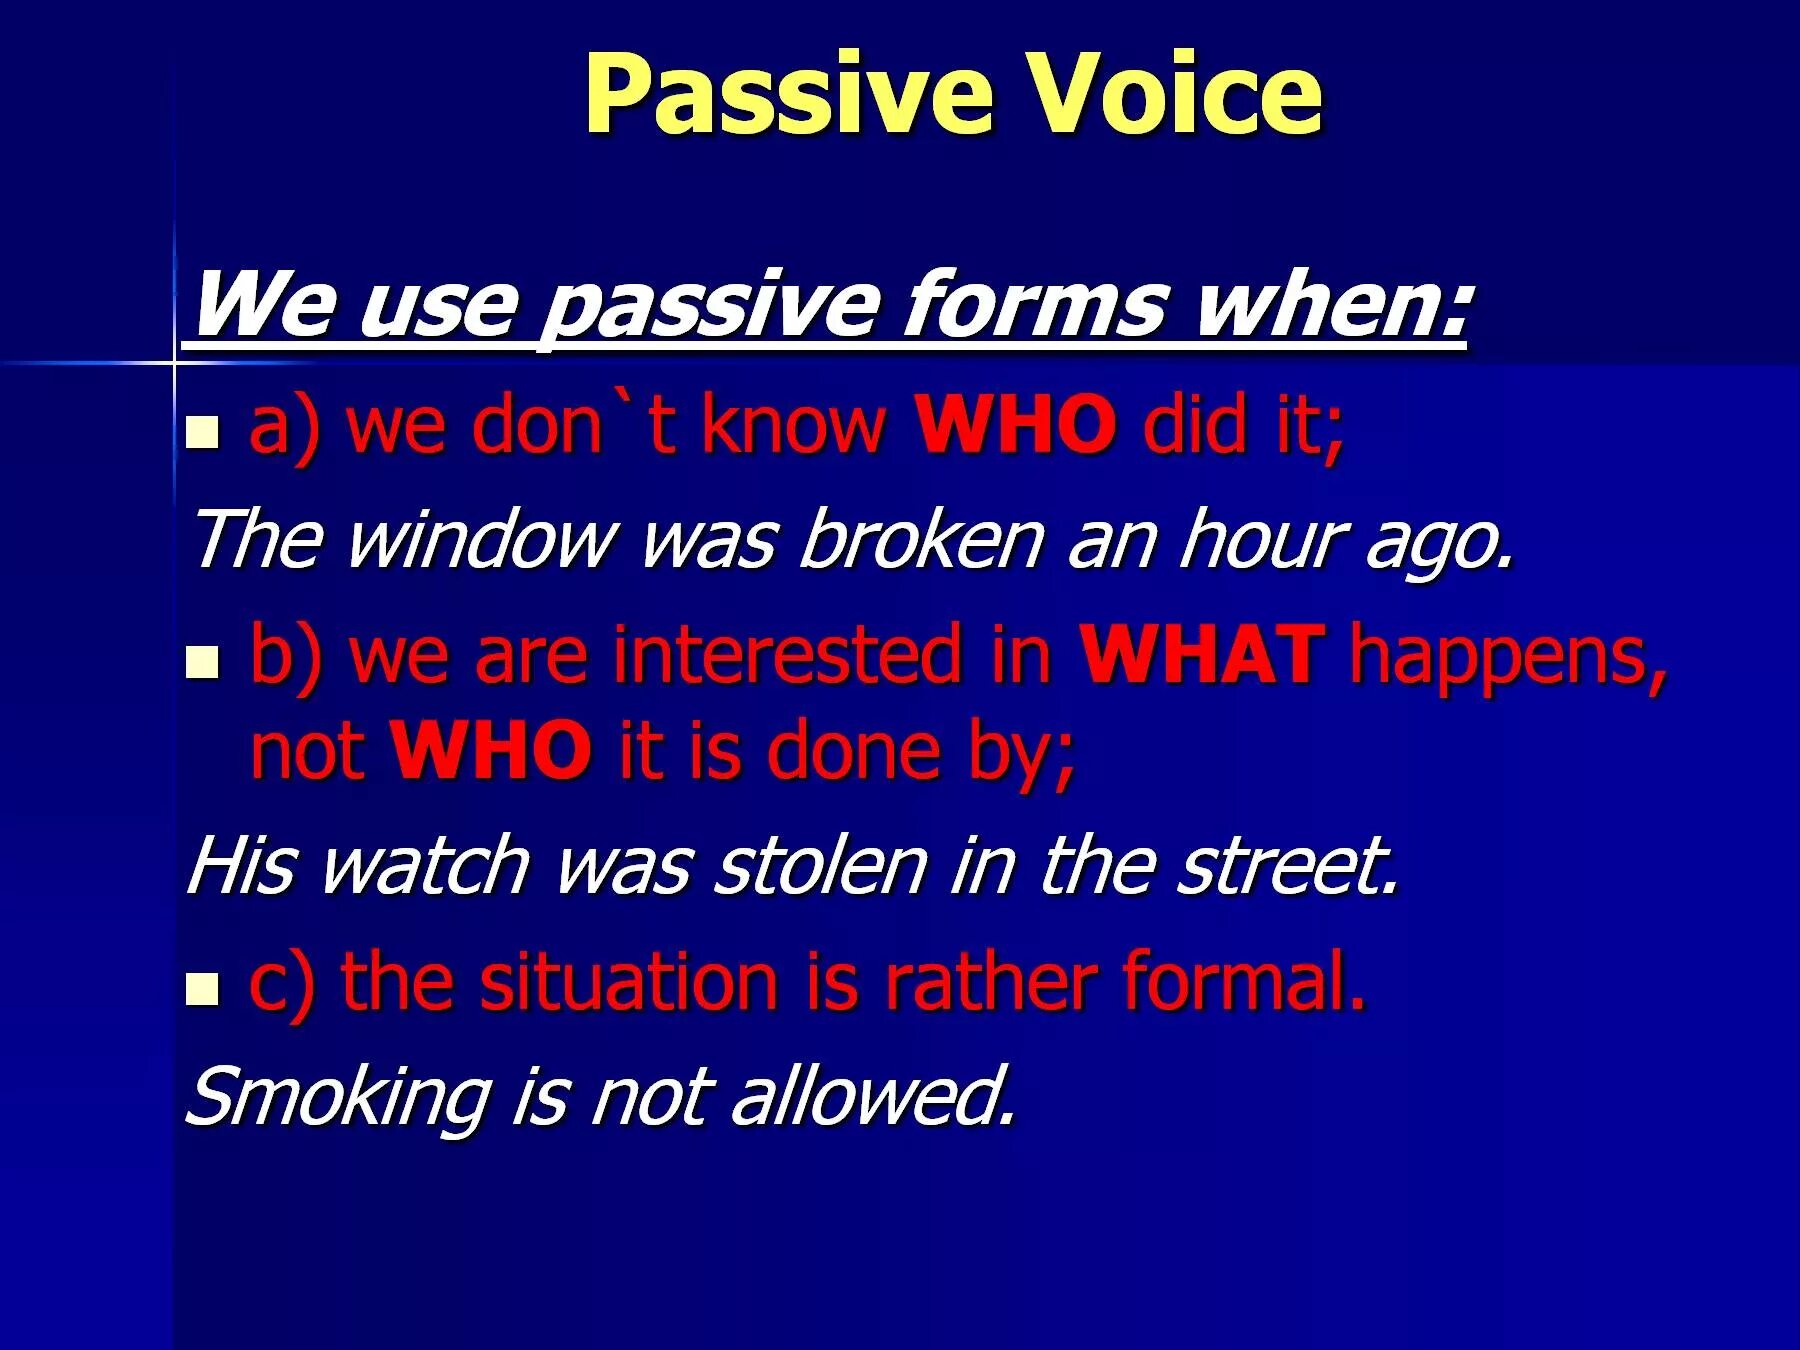 Passive Voice презентация. Пассивный залог. Пассивный залог в английском языке. Предложения в пассивном залоге. Films passive voice